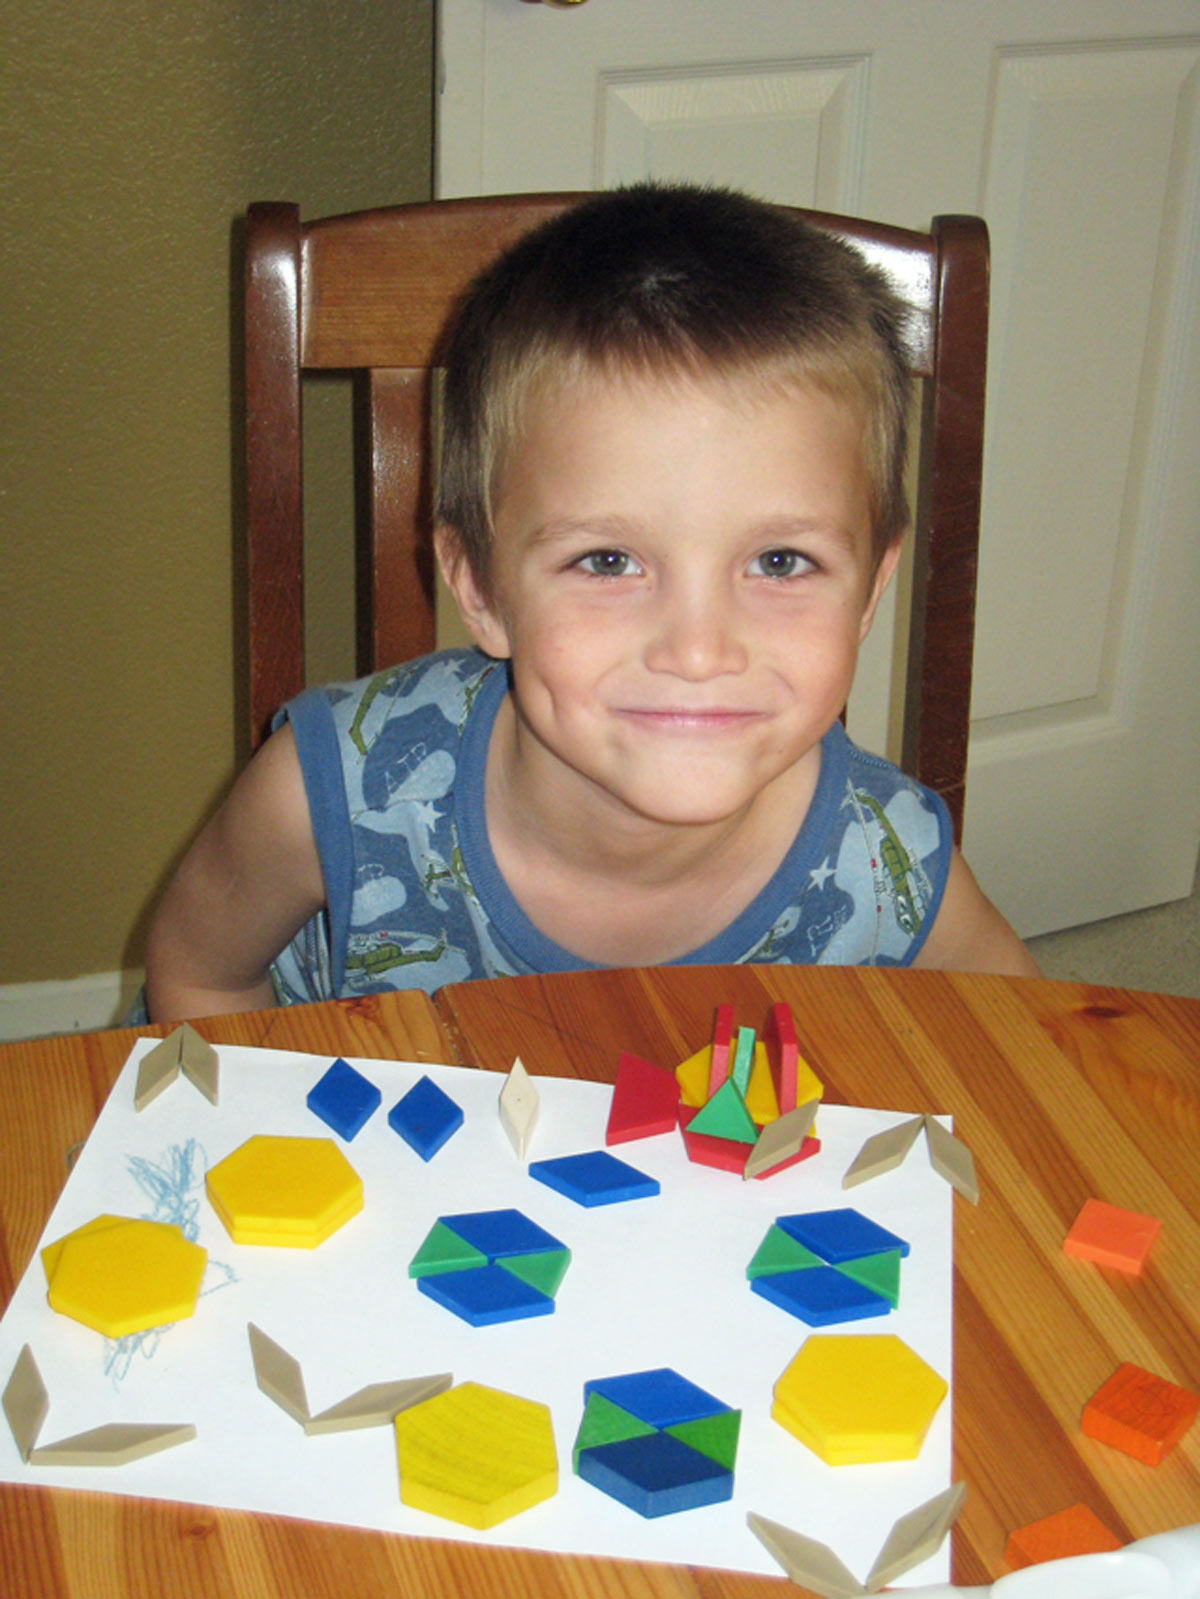 boy with pattern blocks on kitchen table.